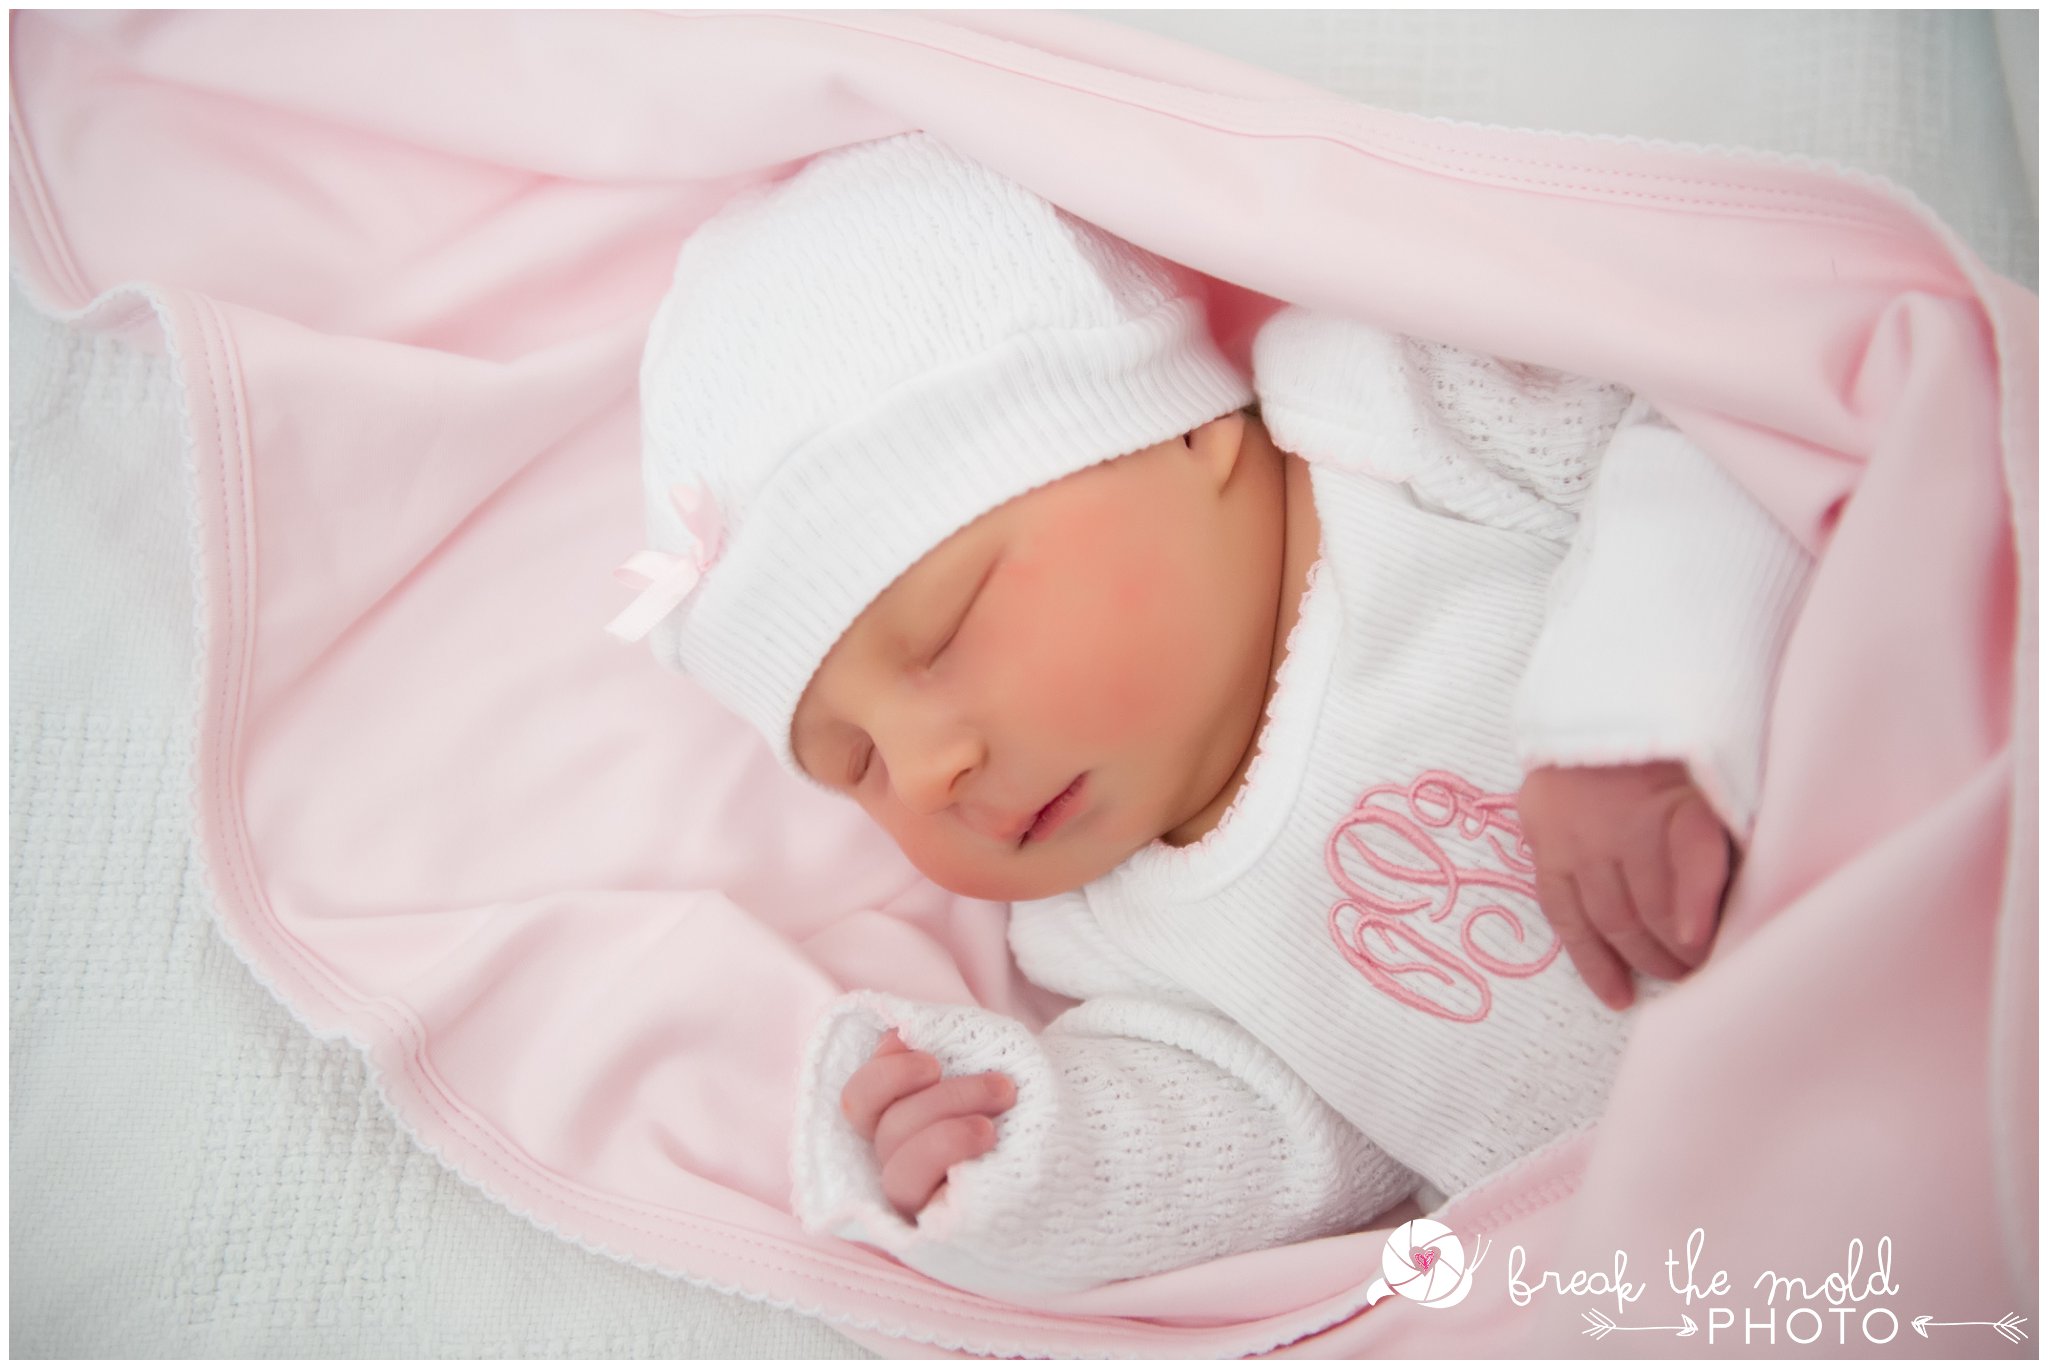 fresh-24-newborn-in-hospital-break-the-mold-photo-baby-girl-sweet-in-room-photos (32).jpg